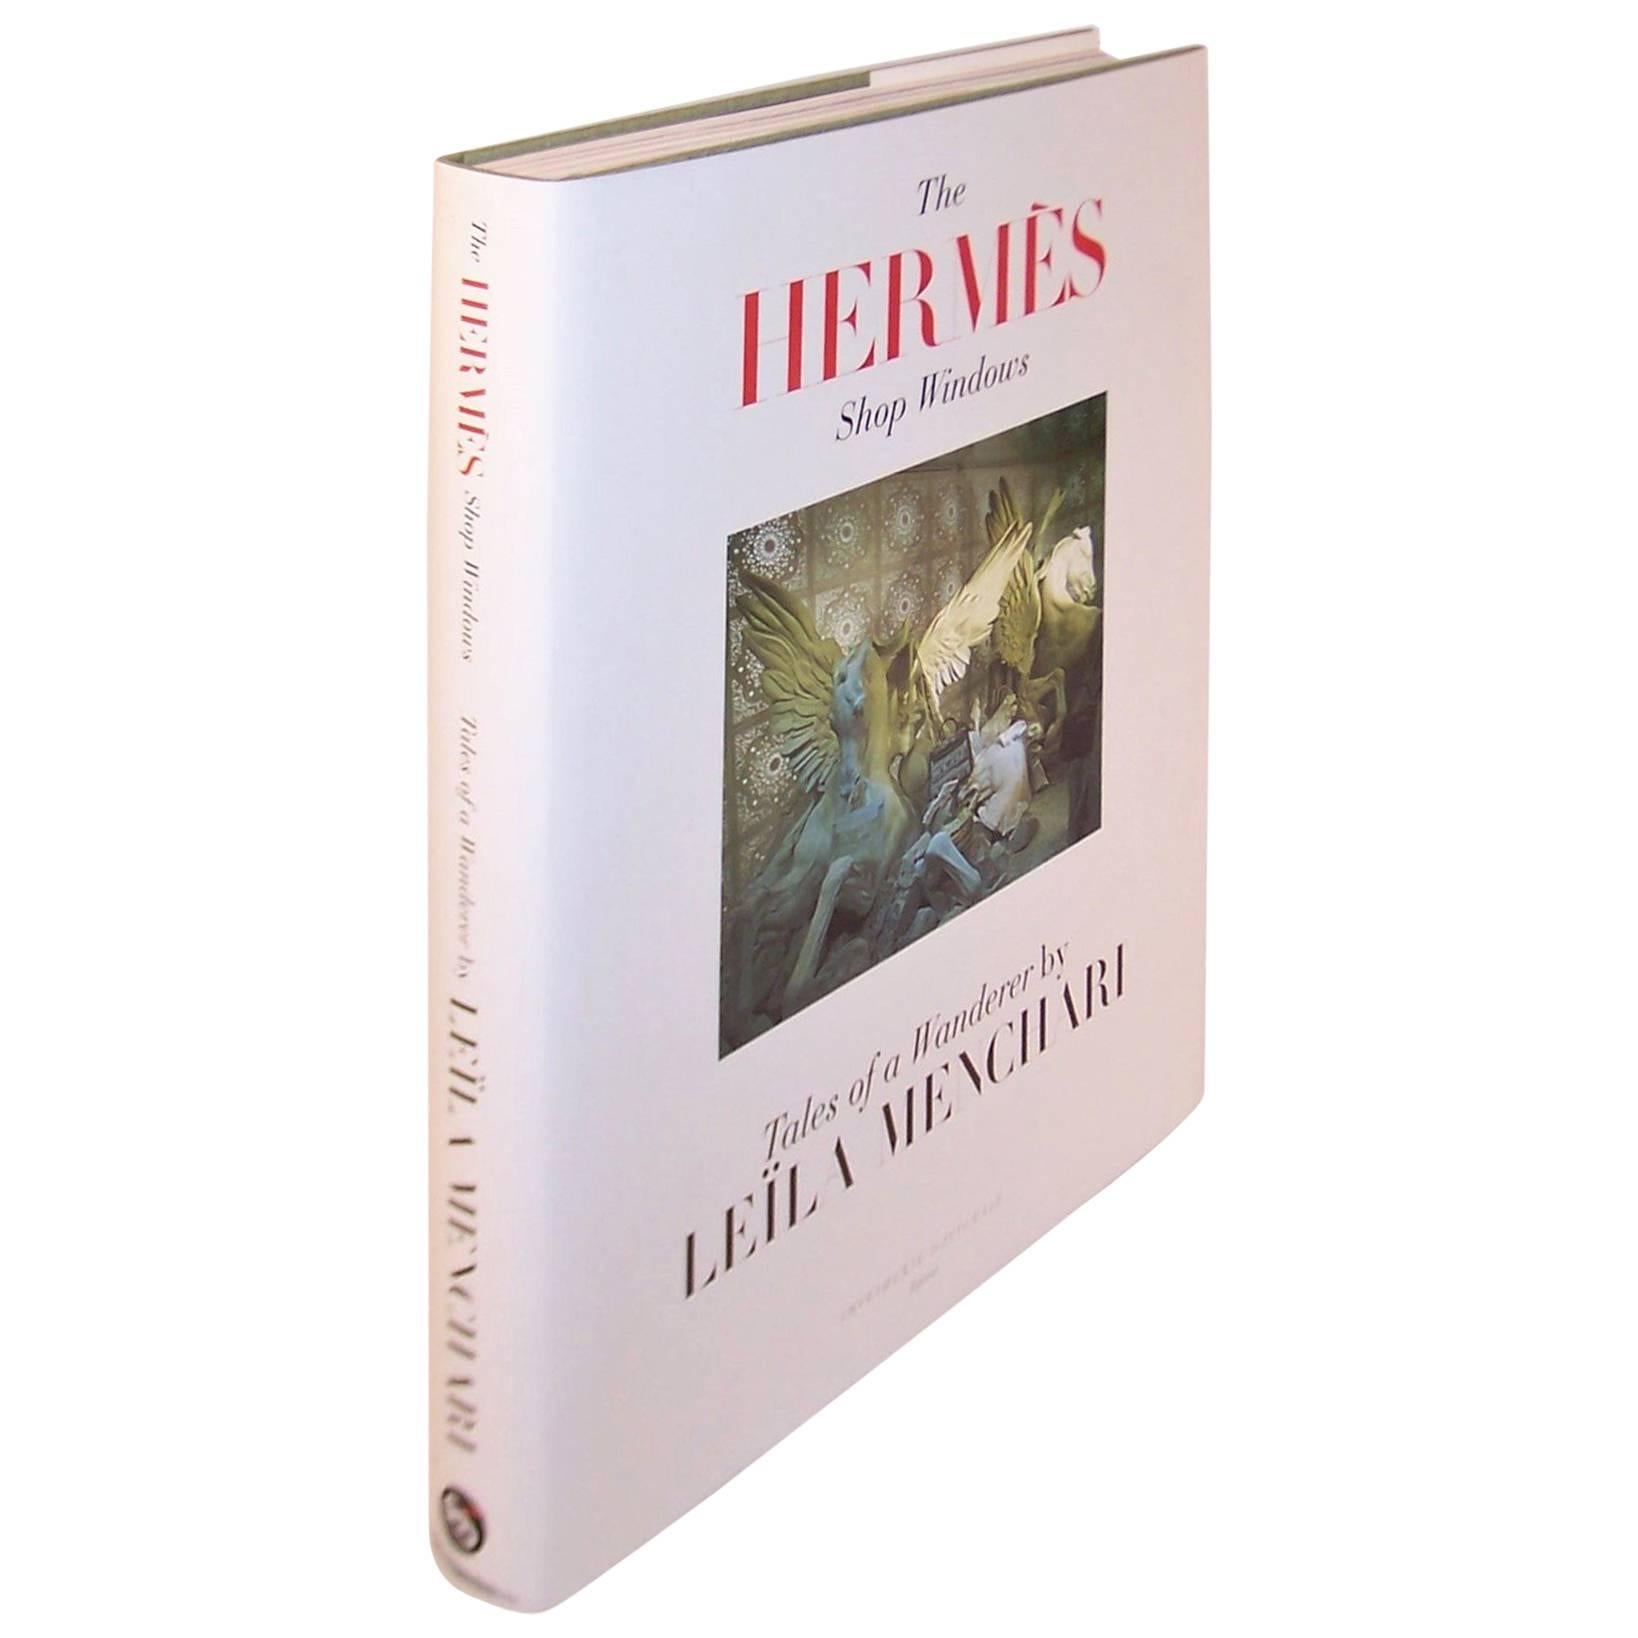 'The Hermes Shop Windows' Book Featuring Art of Leila Menchari